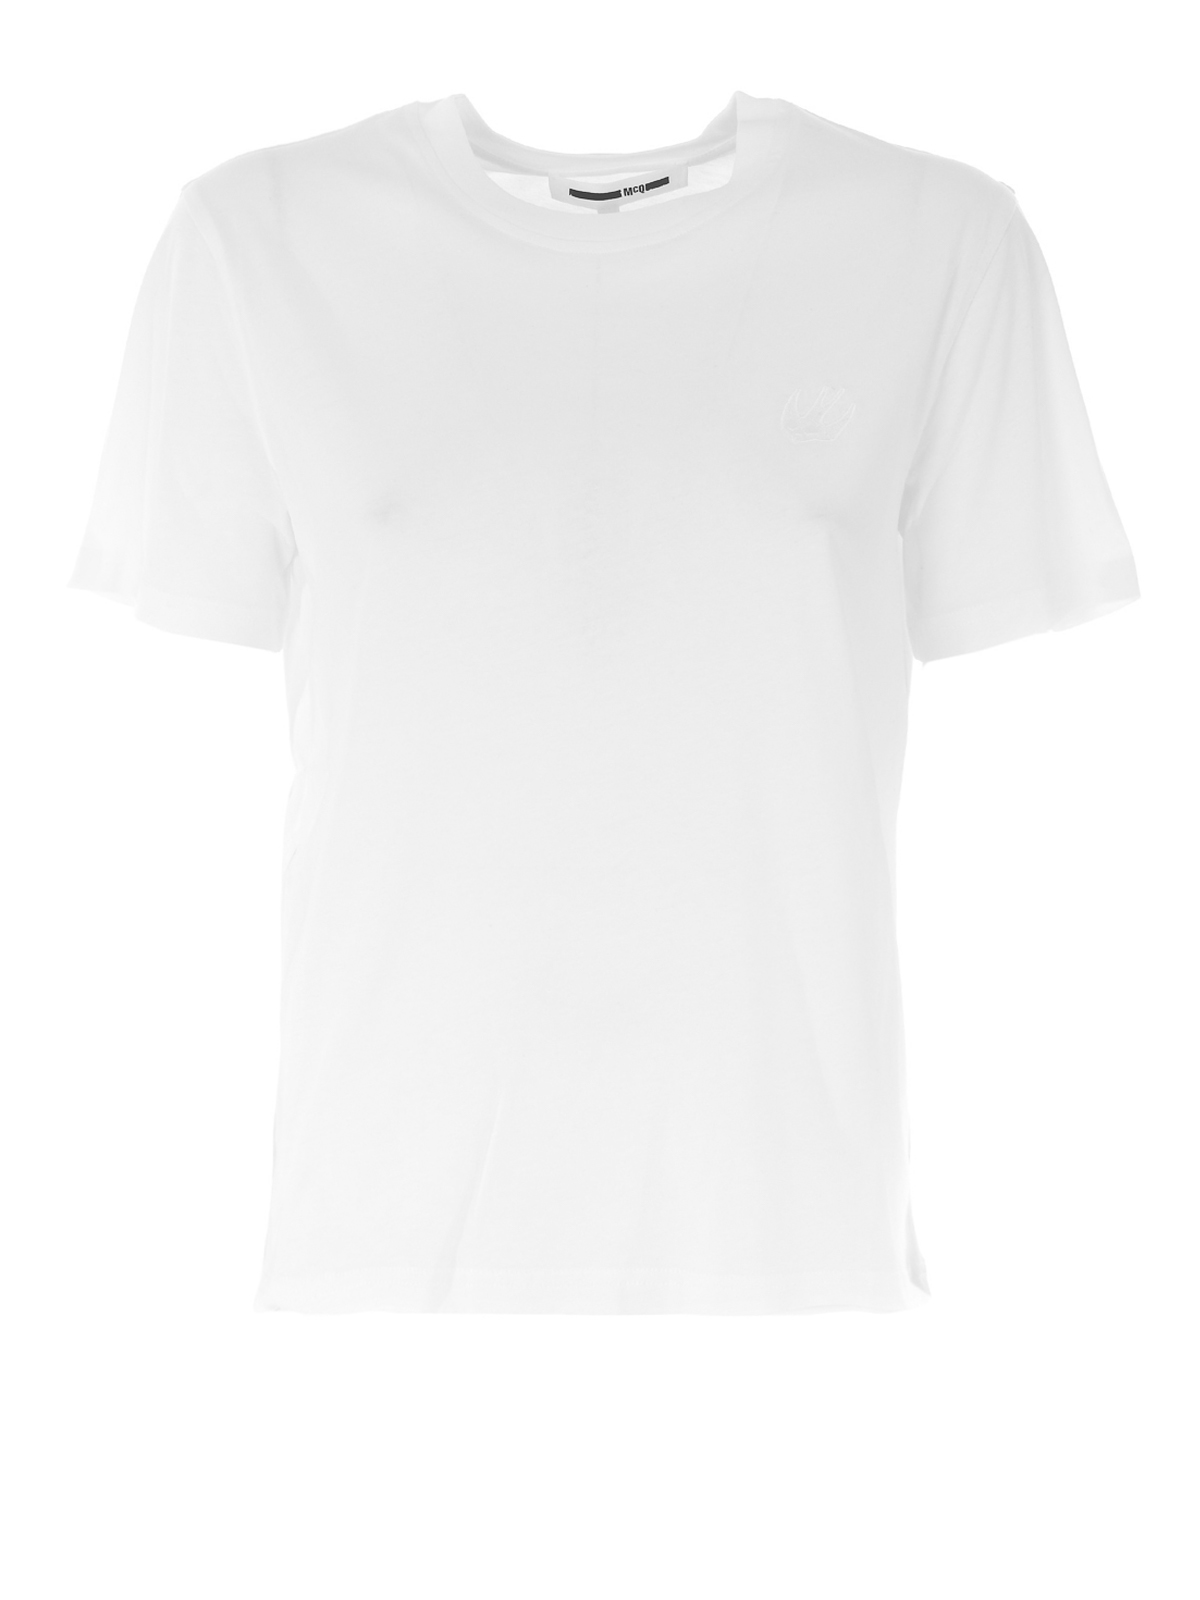 Mcq By Alexander Mcqueen Front Logo White Cotton T-shirt